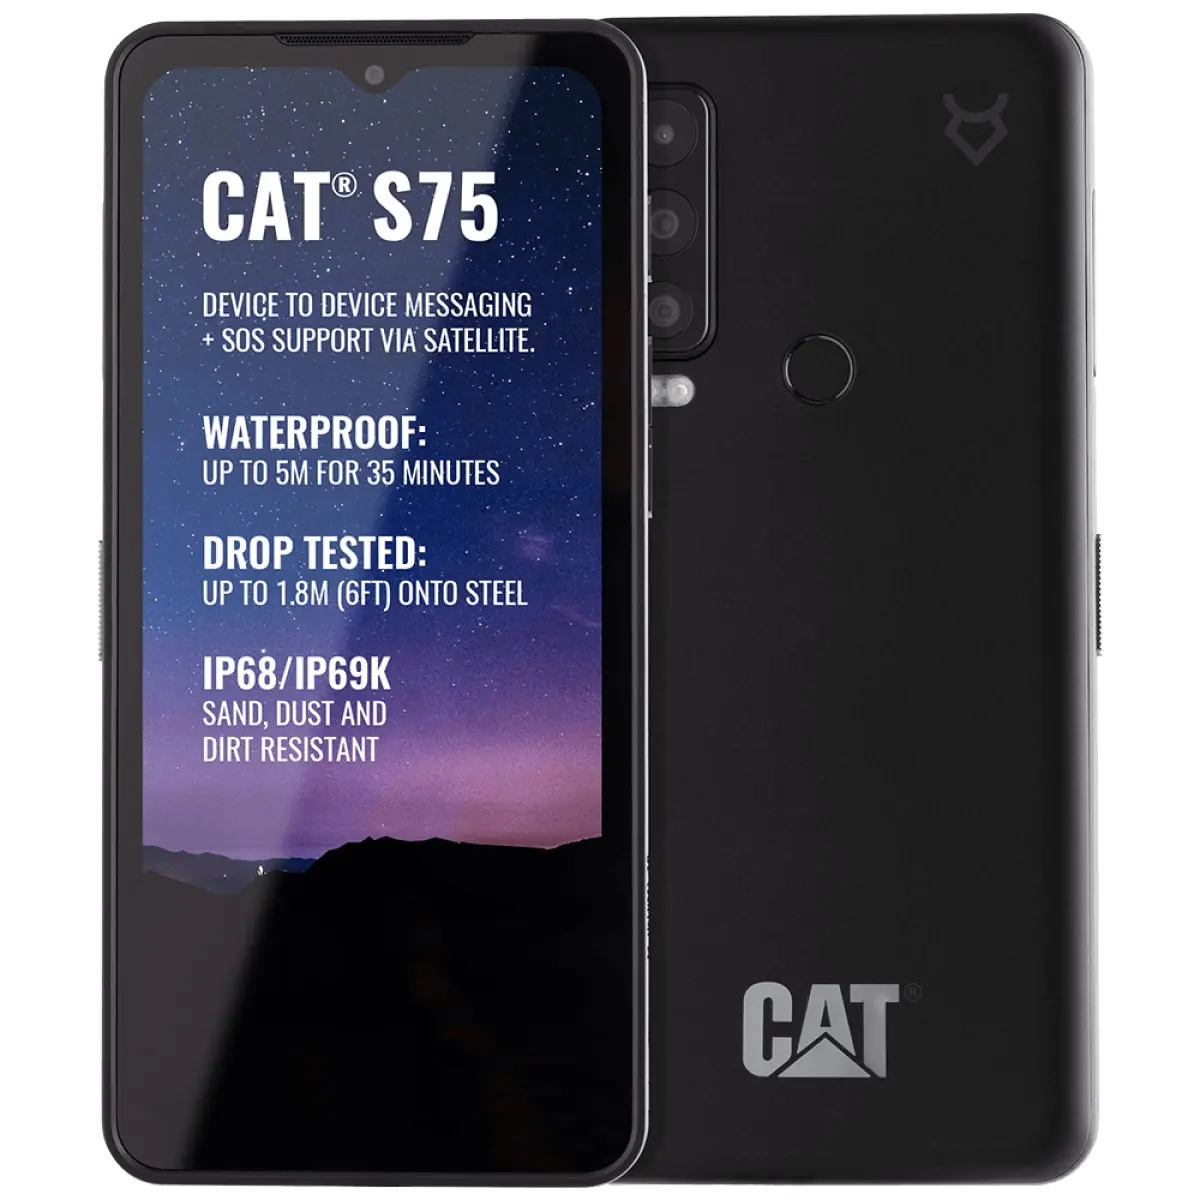 Cat S75 robuust mobiel